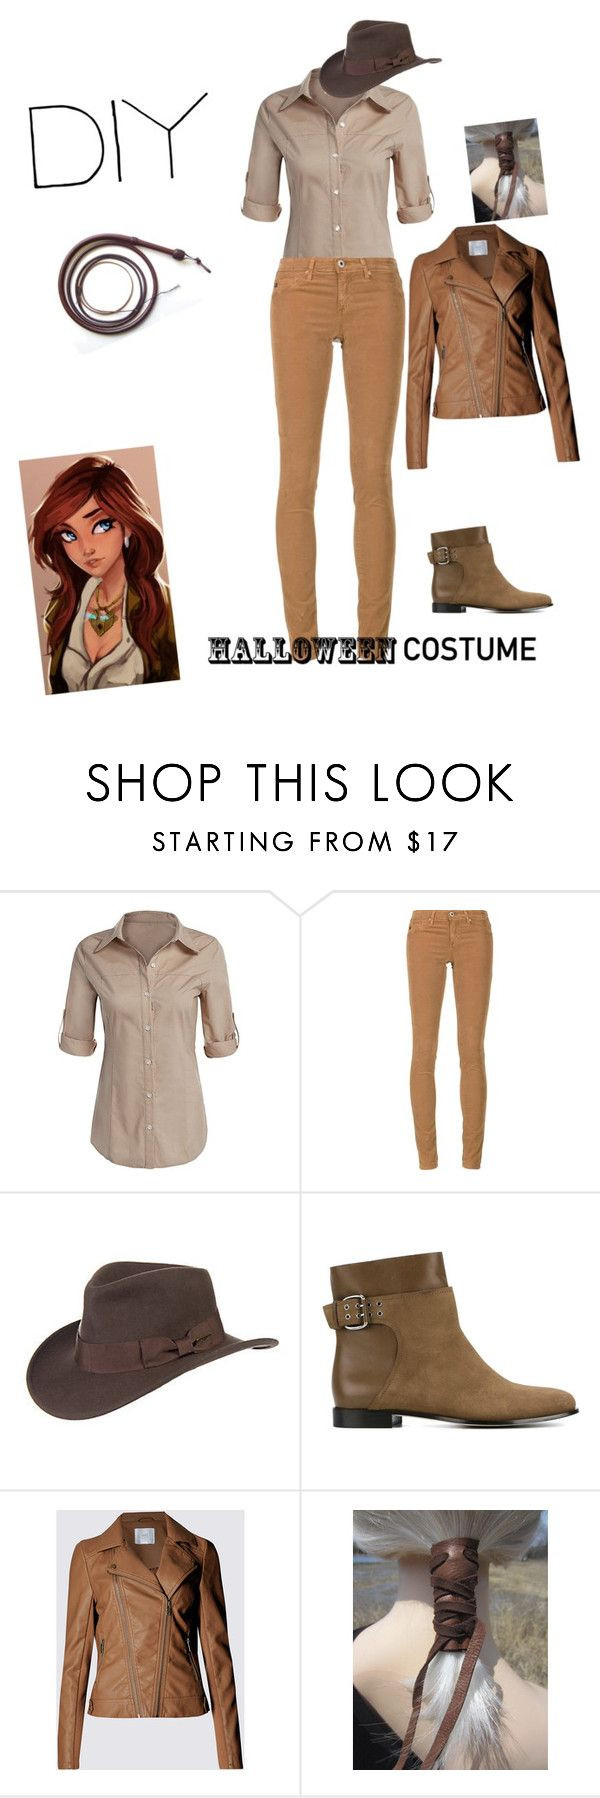 Best ideas about DIY Safari Costume
. Save or Pin The 25 best Safari costume ideas on Pinterest Now.